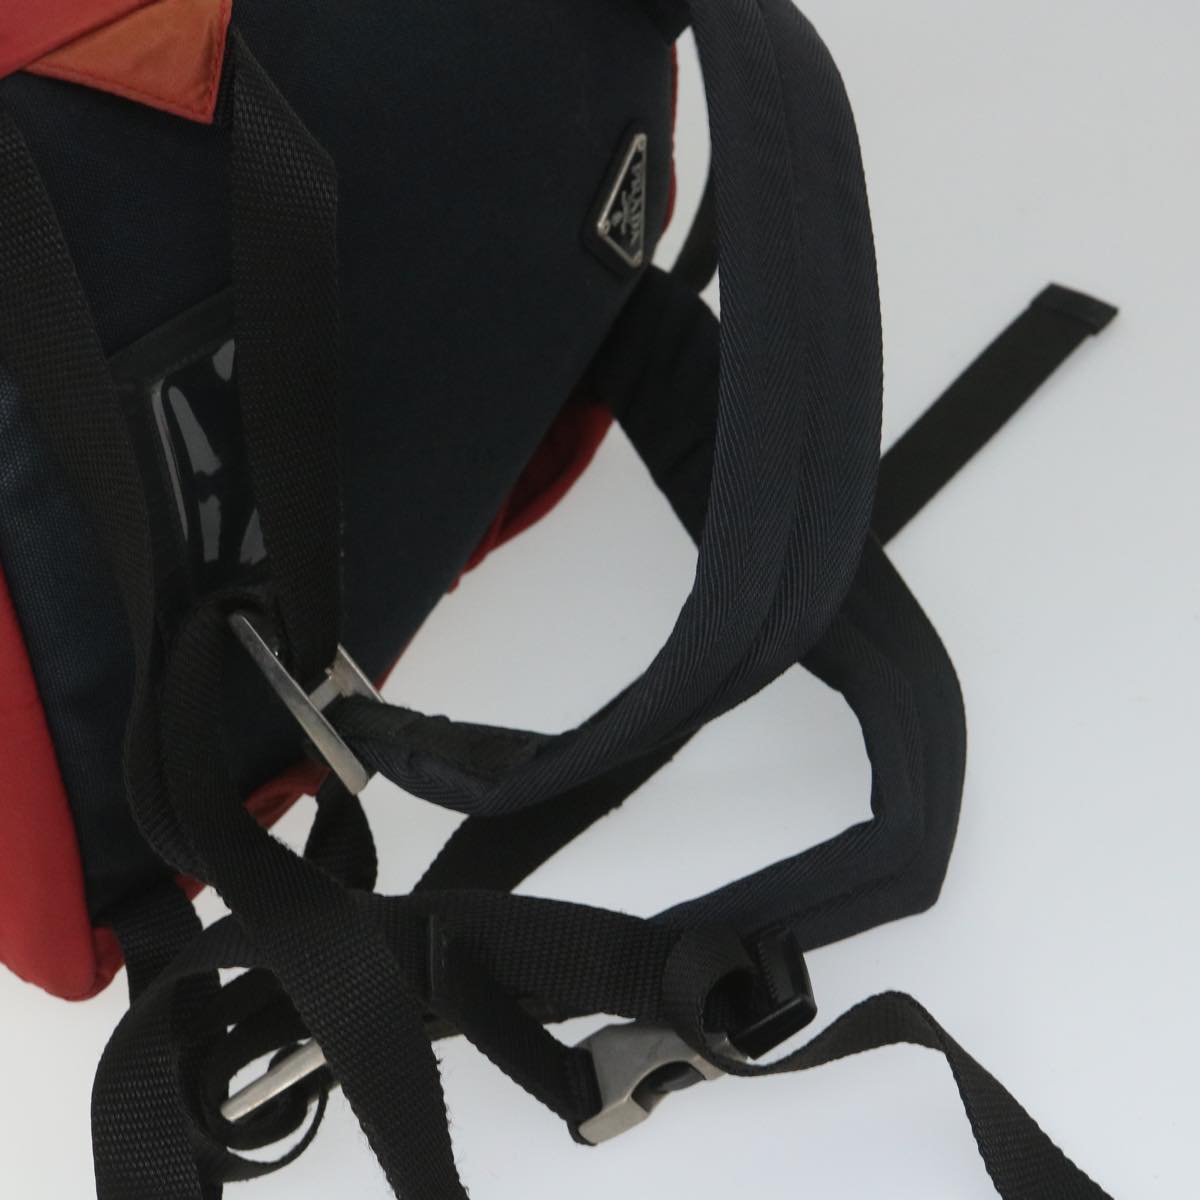 PRADA Backpack Nylon Red Auth bs8895